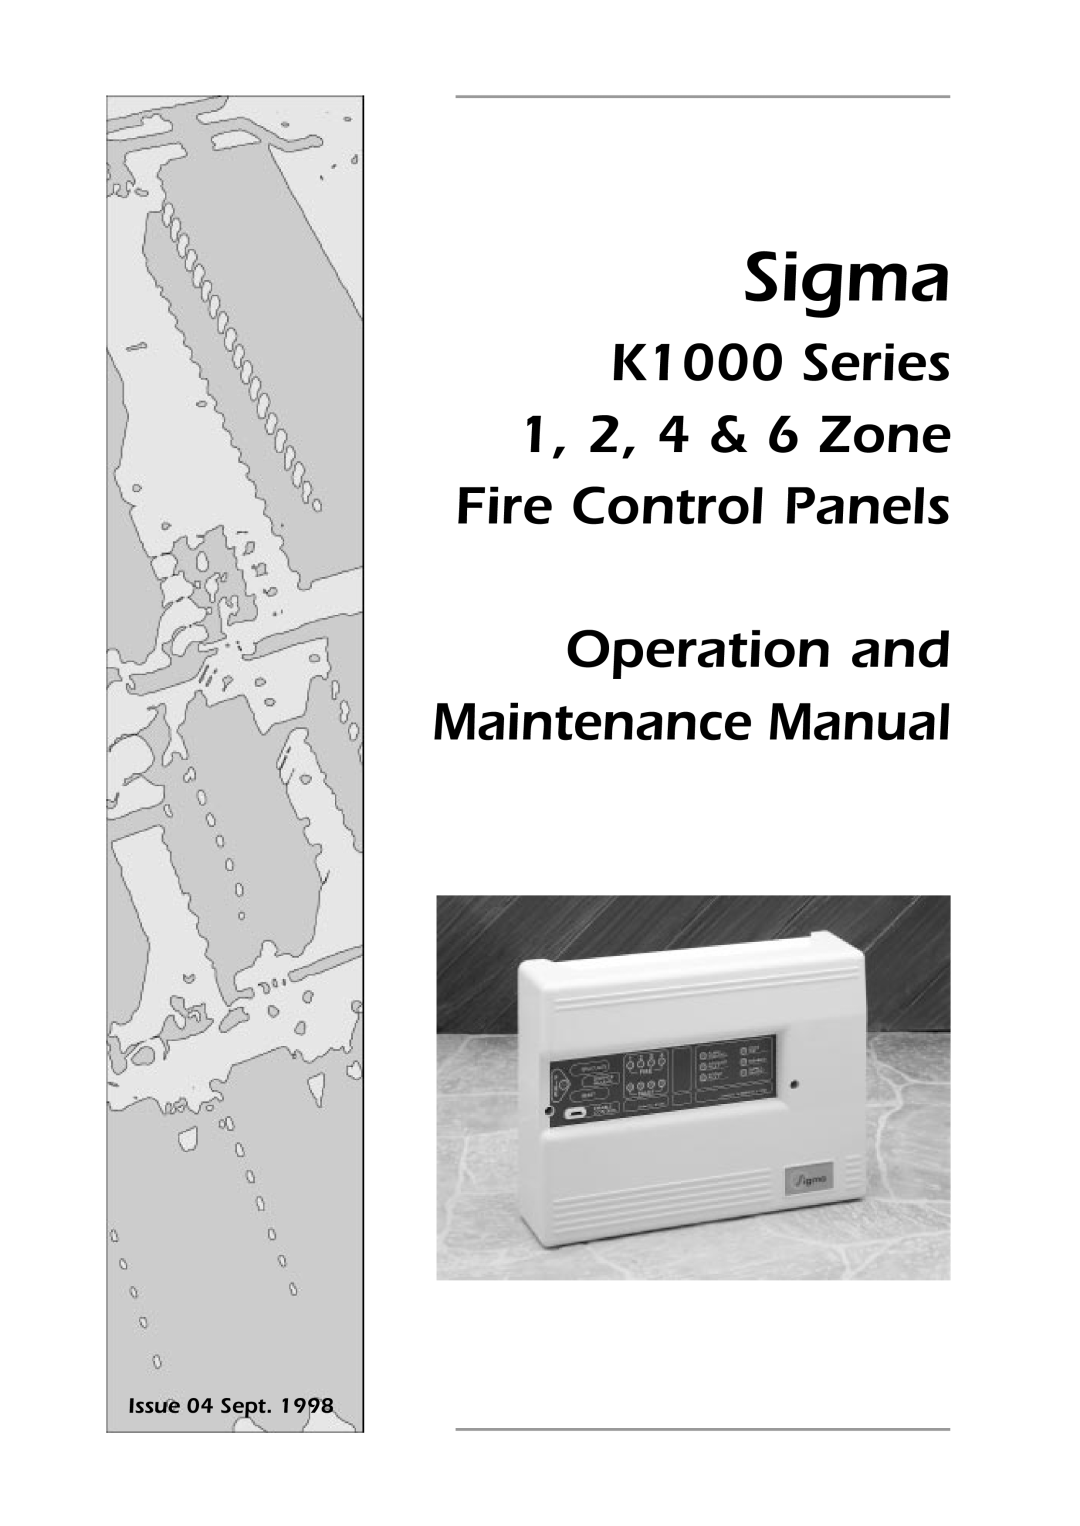 Sigma manual Sigma, K1000 Series 1, 2, 4 & 6 Zone Fire Control Panels, Operation and Maintenance Manual 